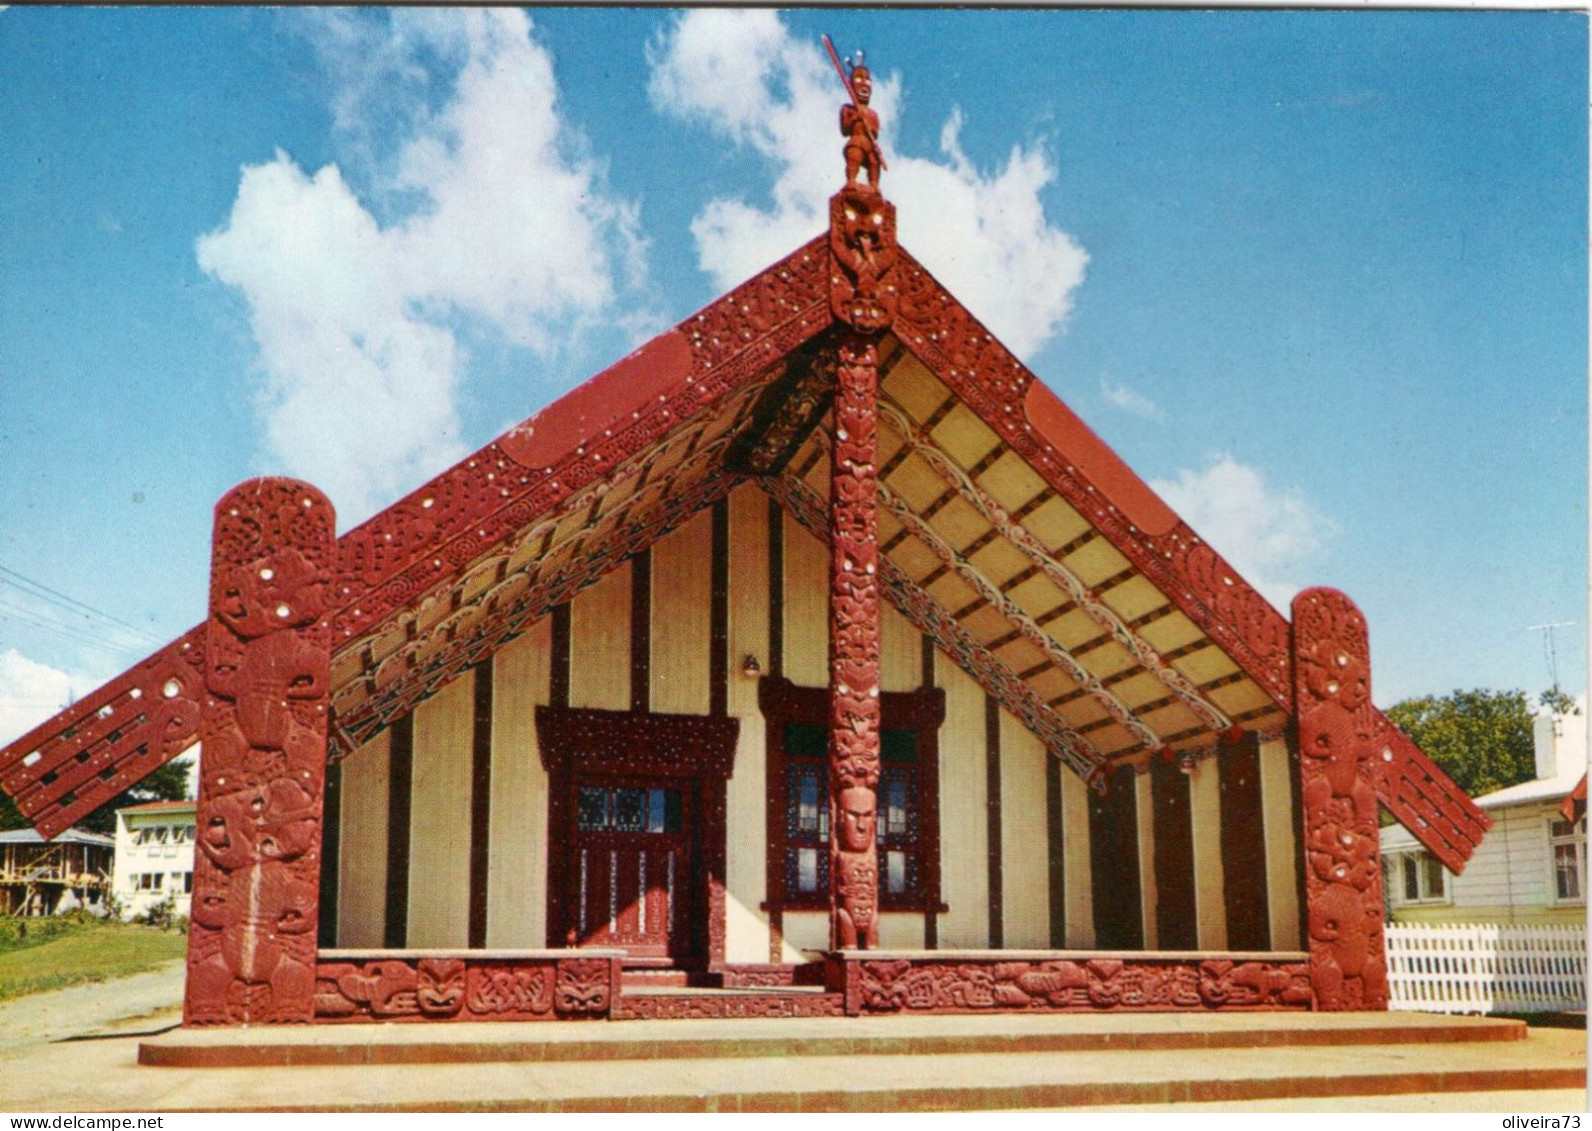 NEW ZEALAND - ROTURUA - Tamatekapua  Meeting House, Ohinemmutu - New Zealand